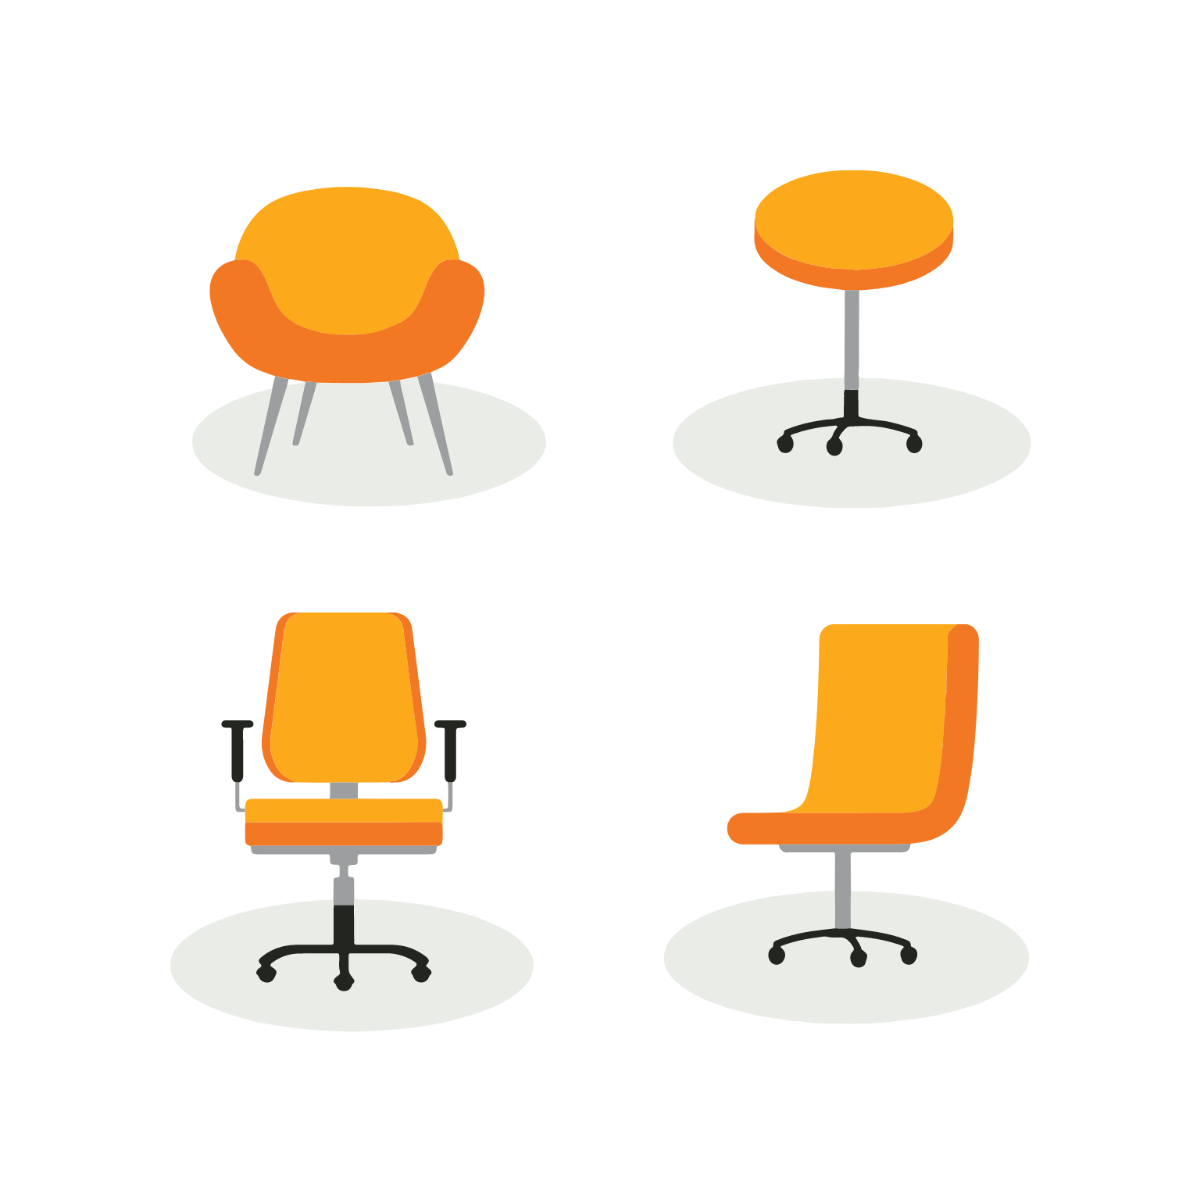 https://images.template.net/196567/free-office-chair-vector-edit-online-1.jpg